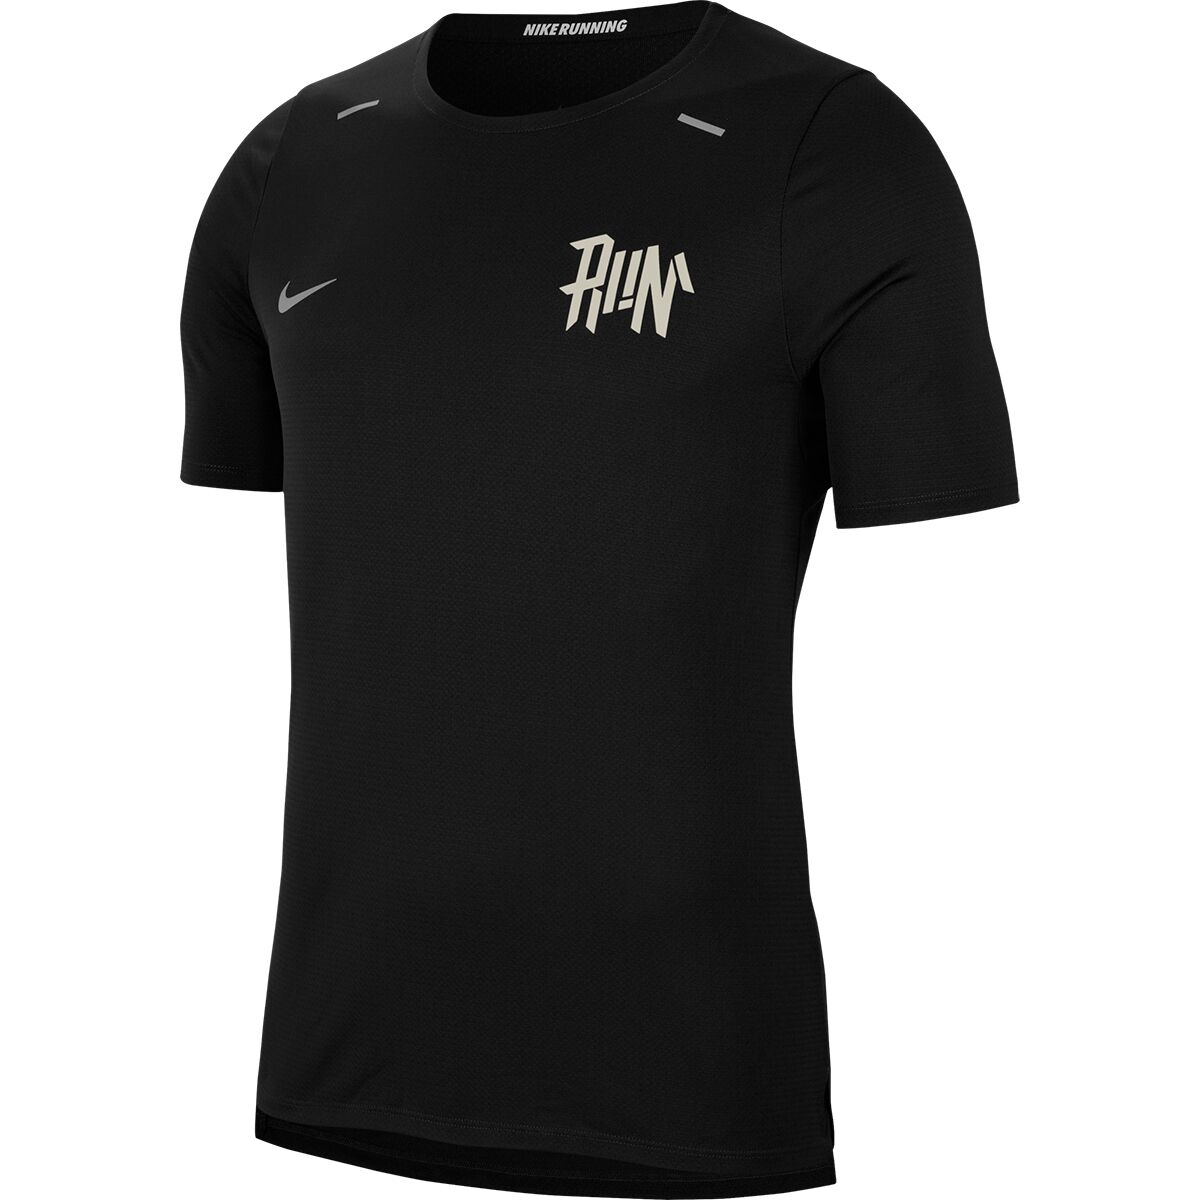 Nike Dri-Fit Breathe Rise 365 Wild Run Top - Men's - Clothing